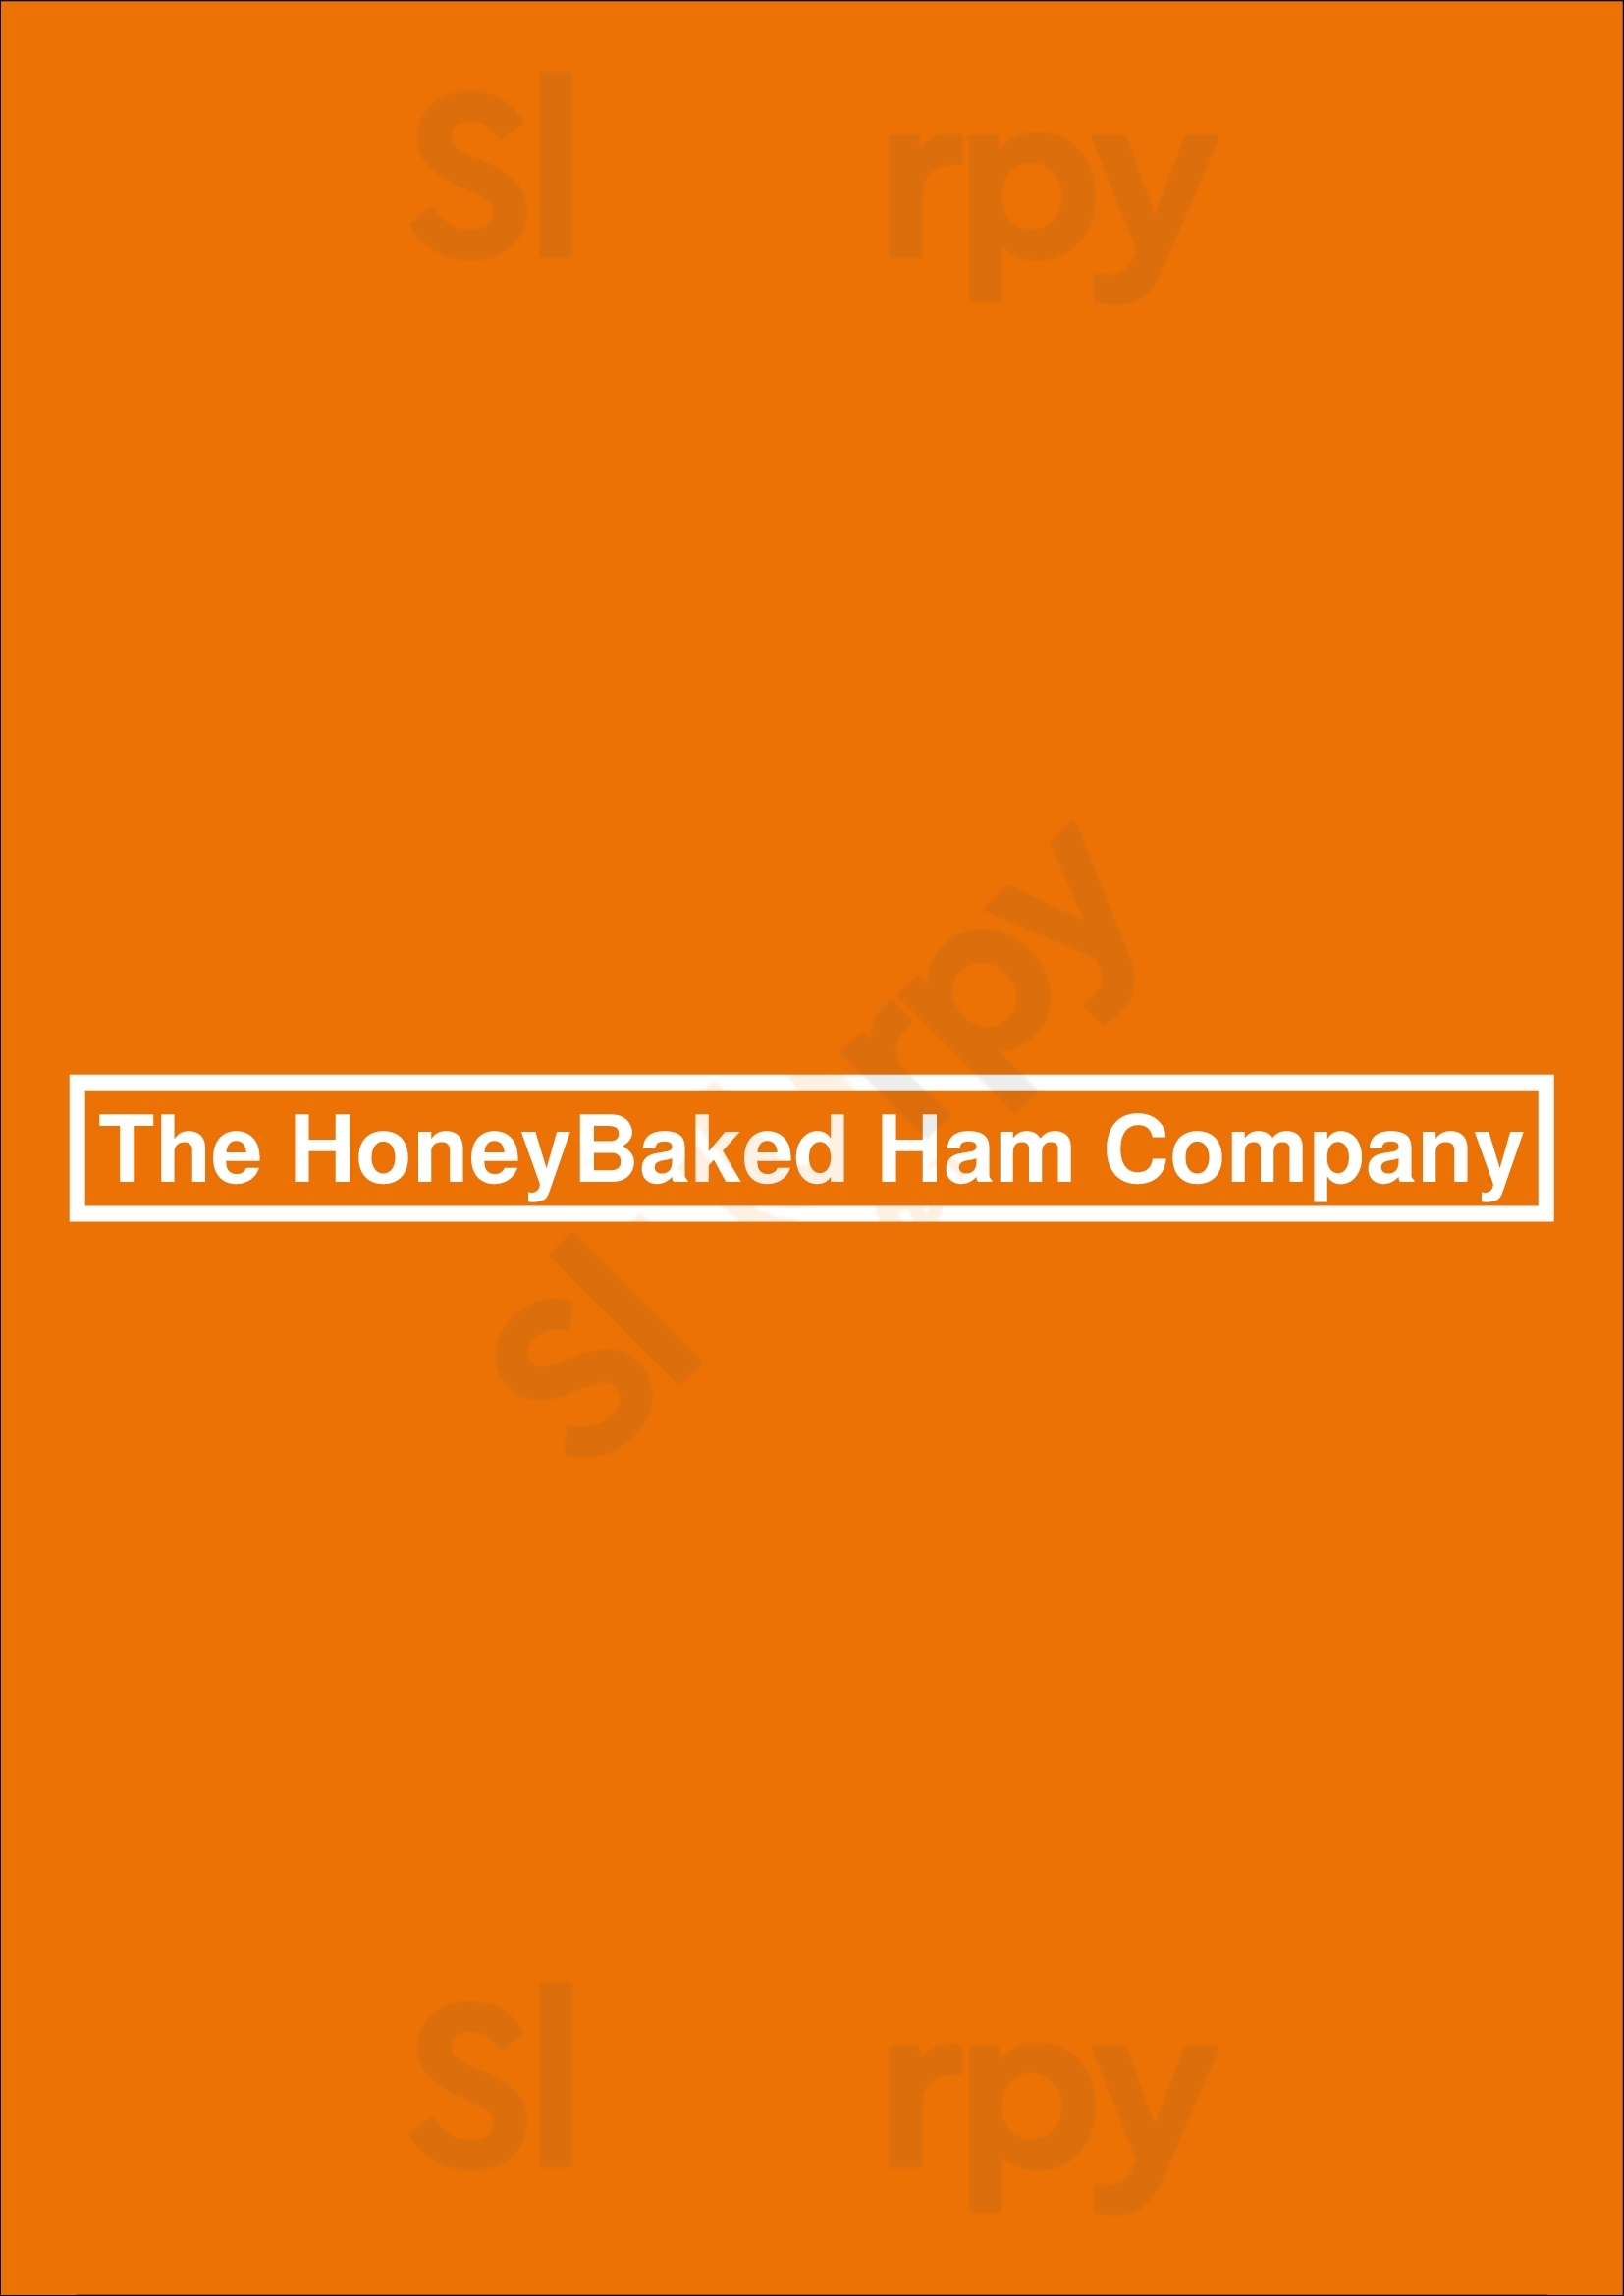 The Honey Baked Ham Company Austin Menu - 1